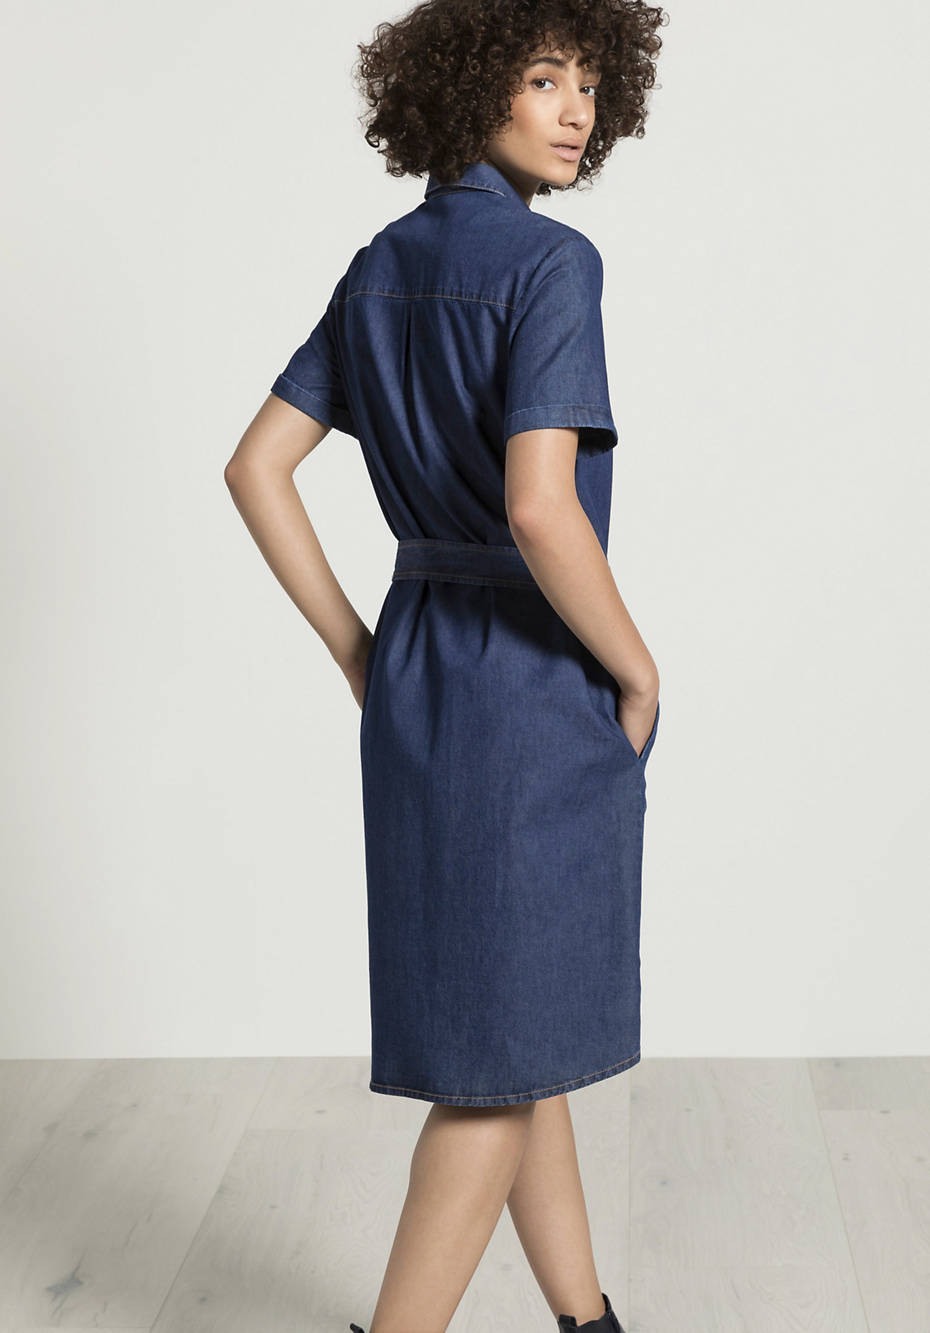 Denim dress made of organic cotton with linen